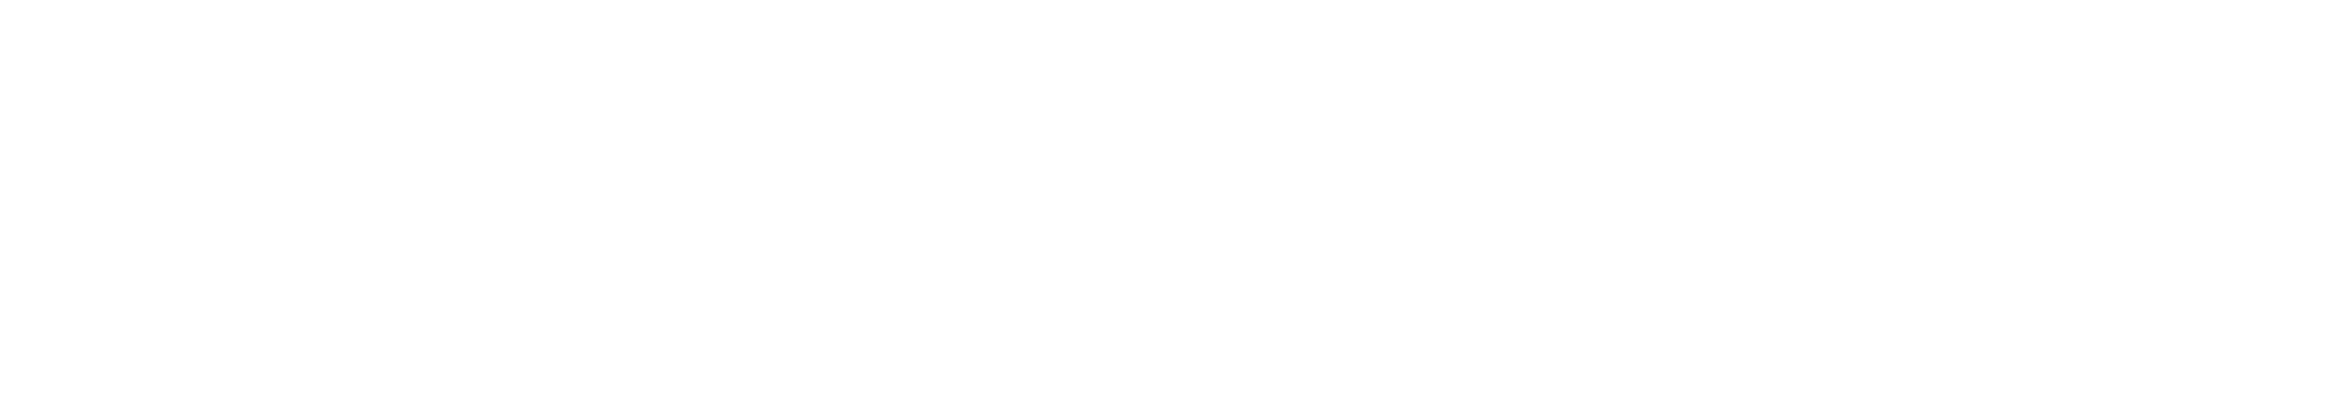 National Gallery white logo